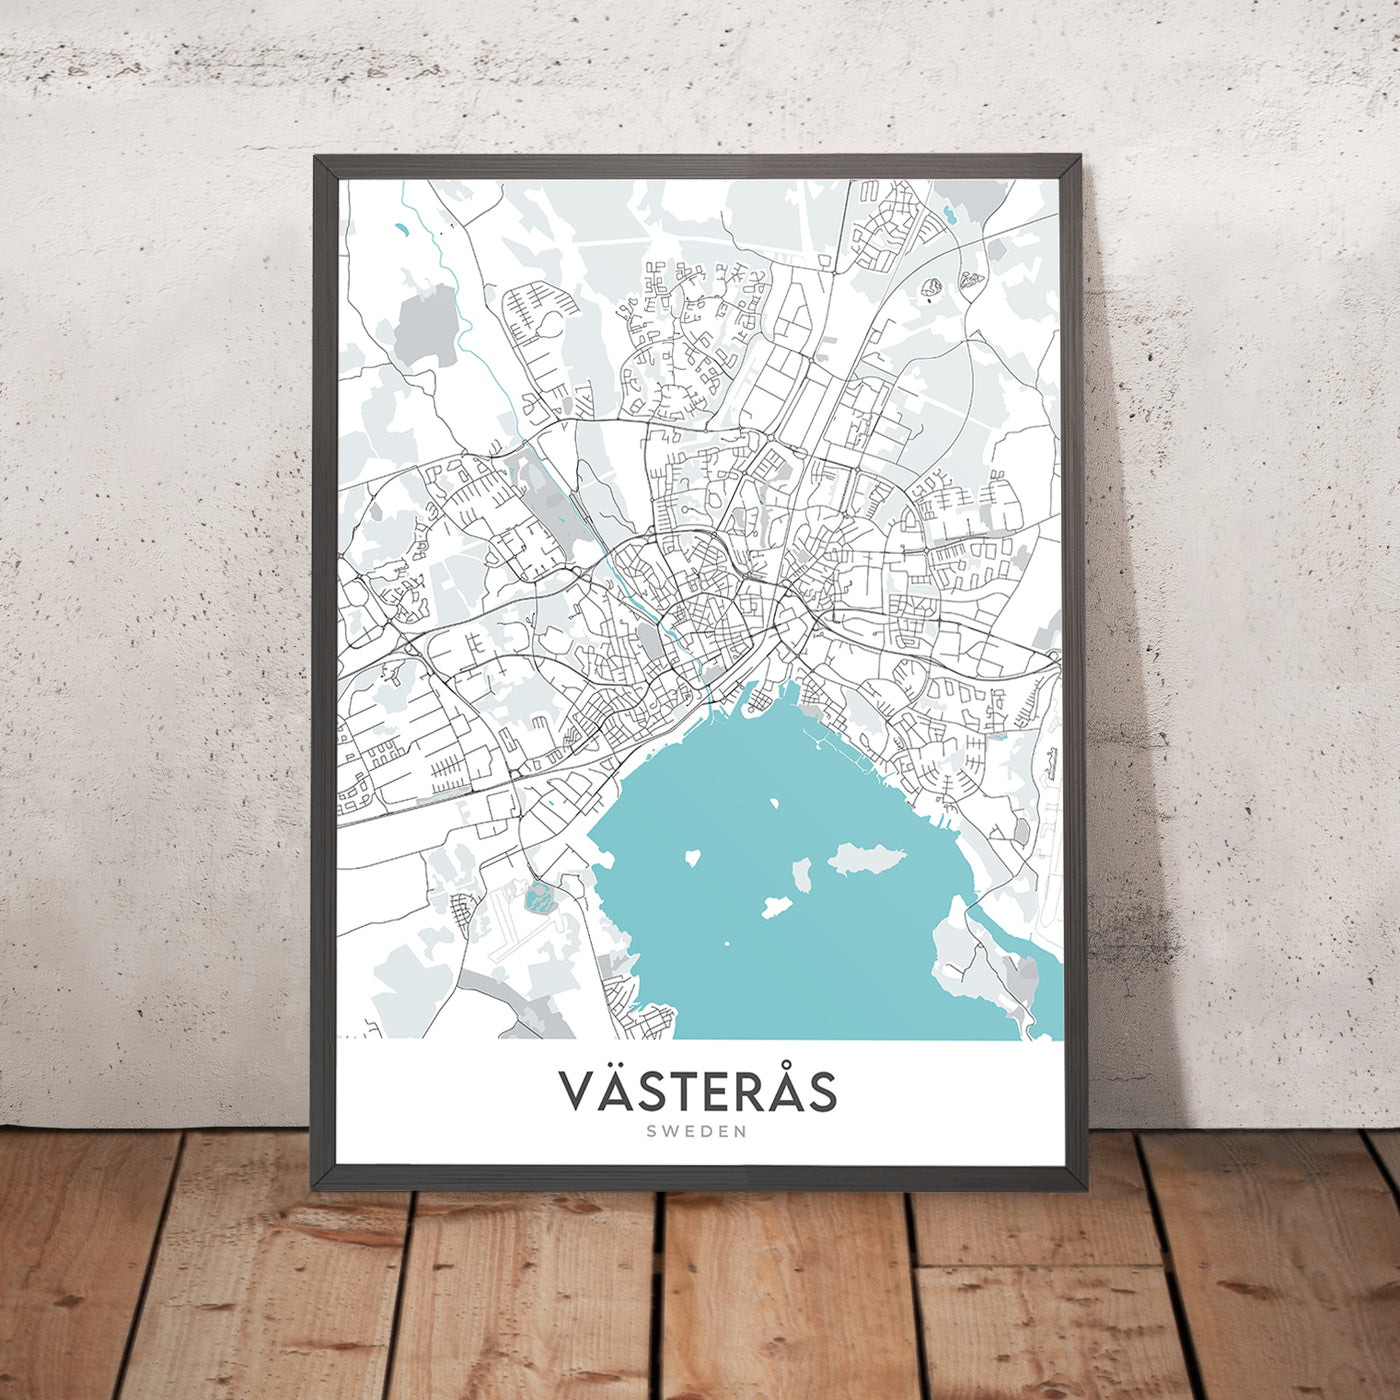 Modern City Map of Västerås, Sweden: Castle, Cathedral, Concert Hall, University, Zoo